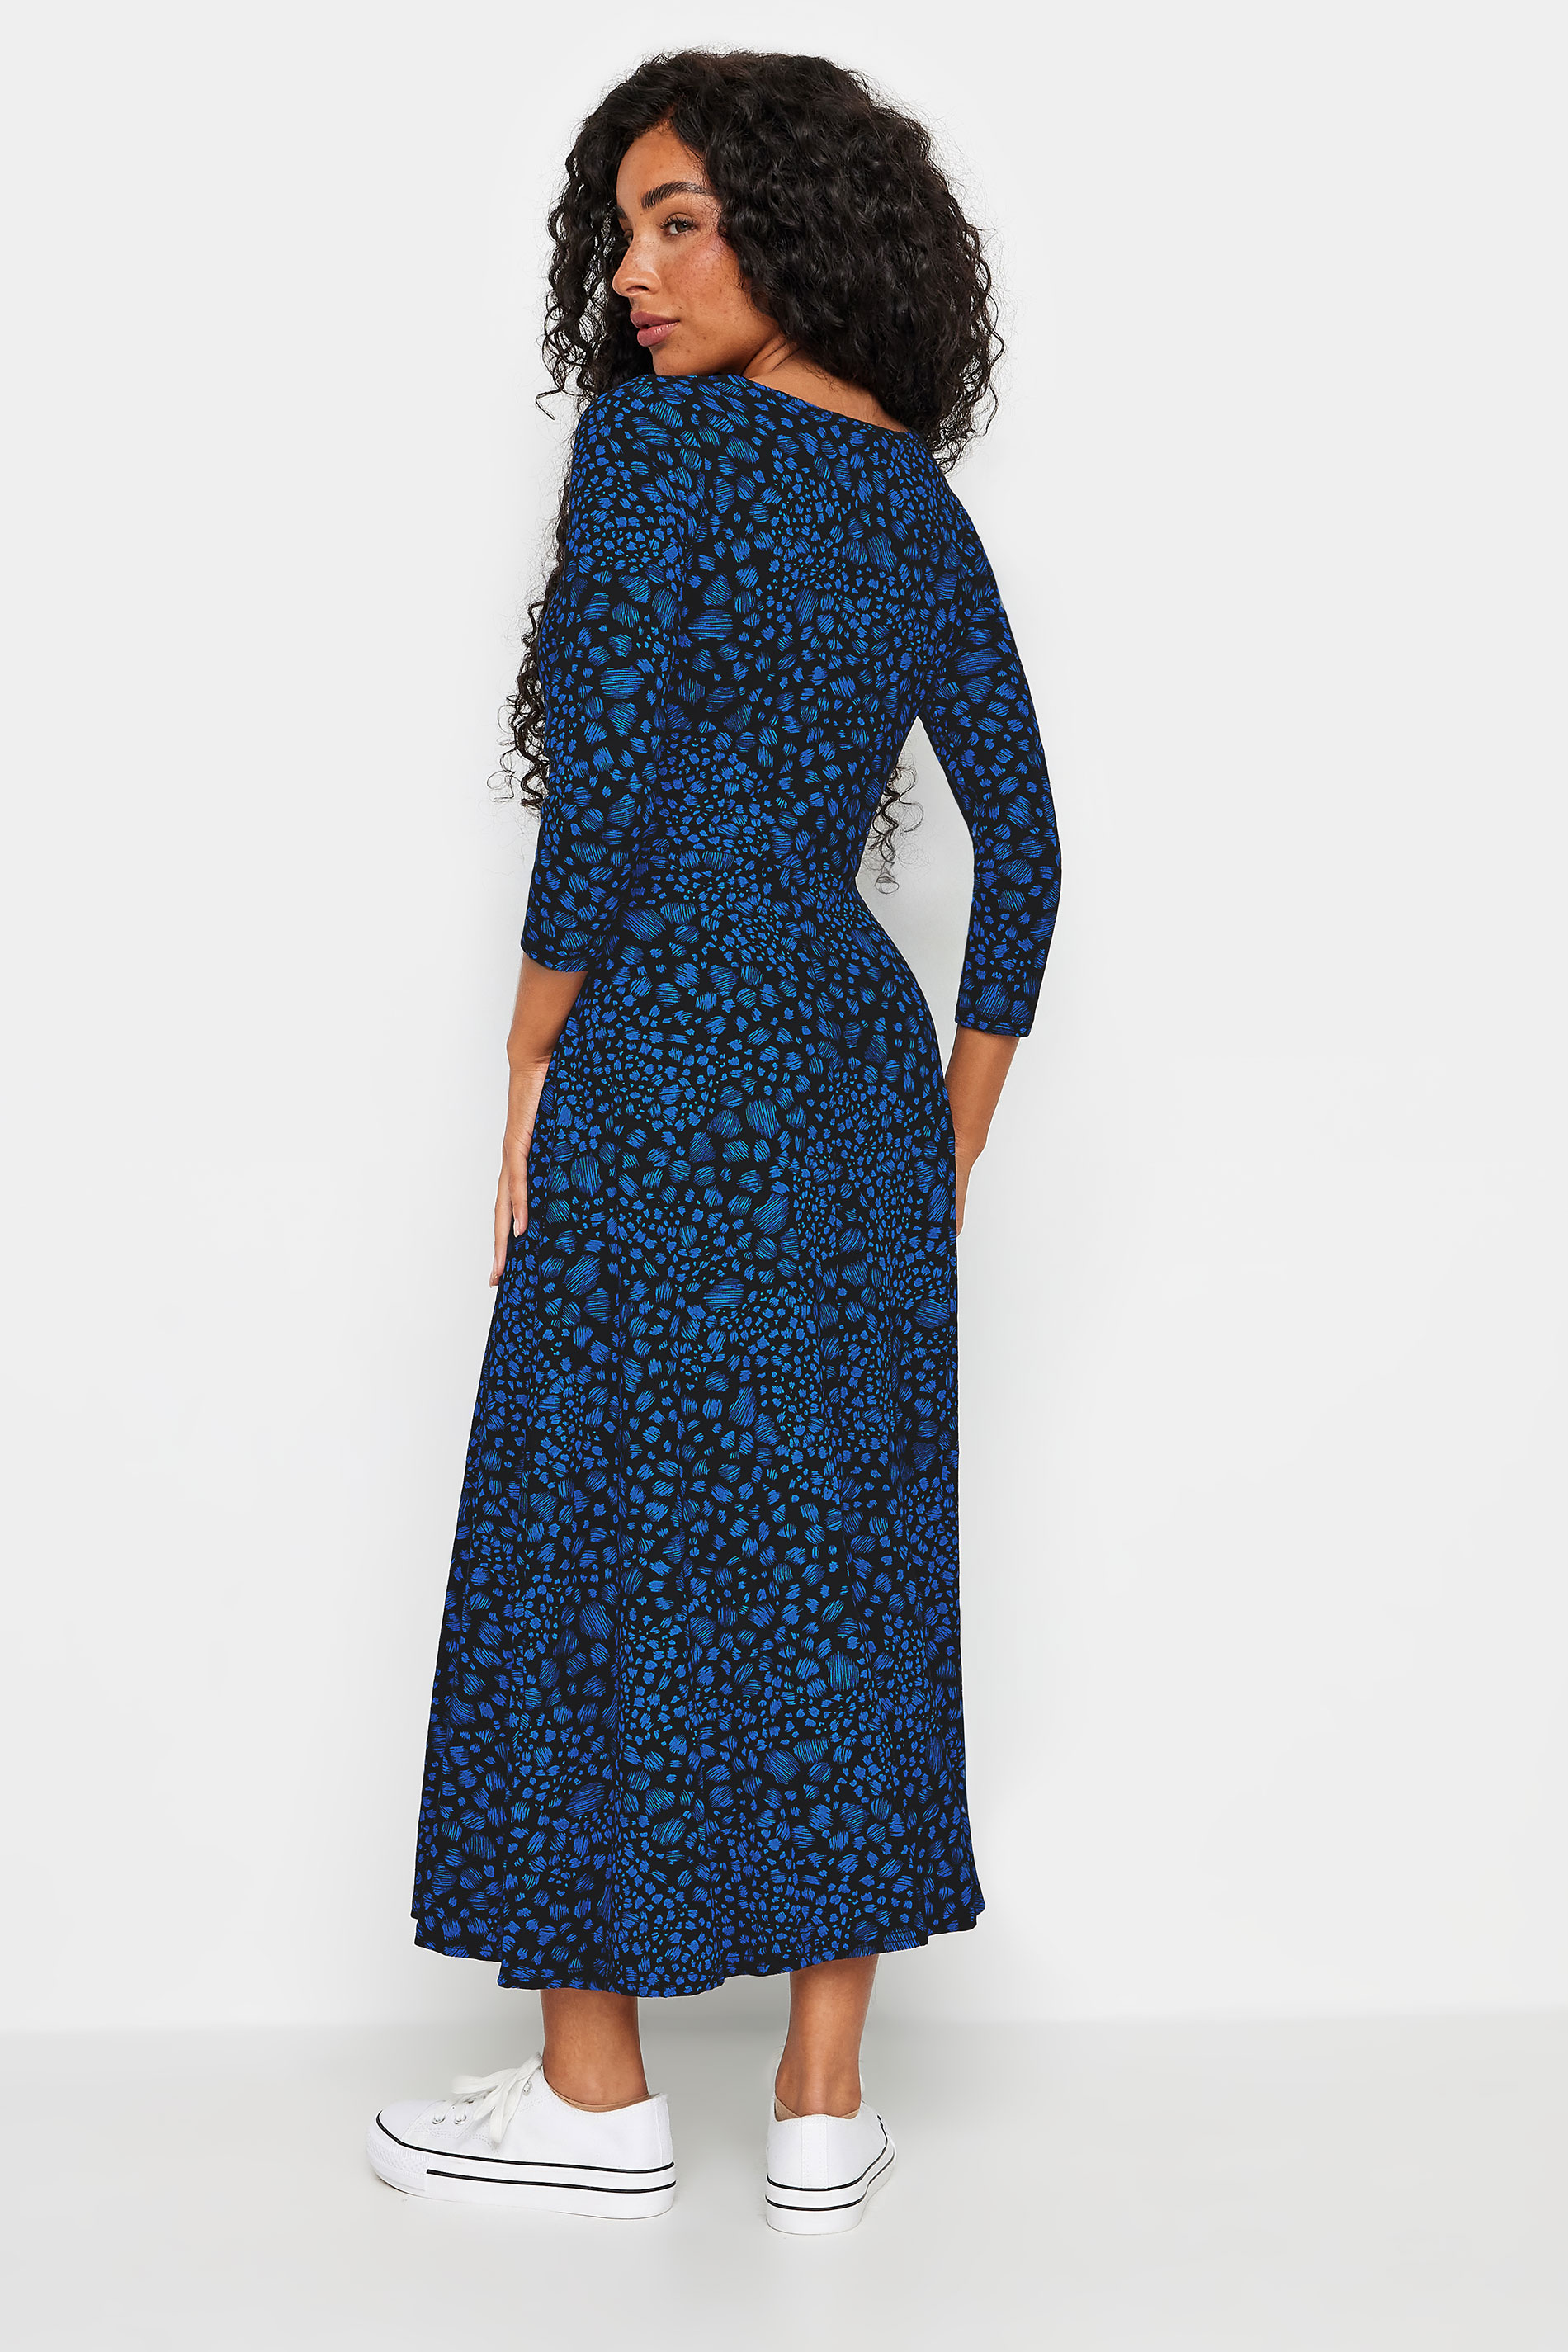 M&Co Petite Blue Spot Markings Midi Dress | M&Co 3